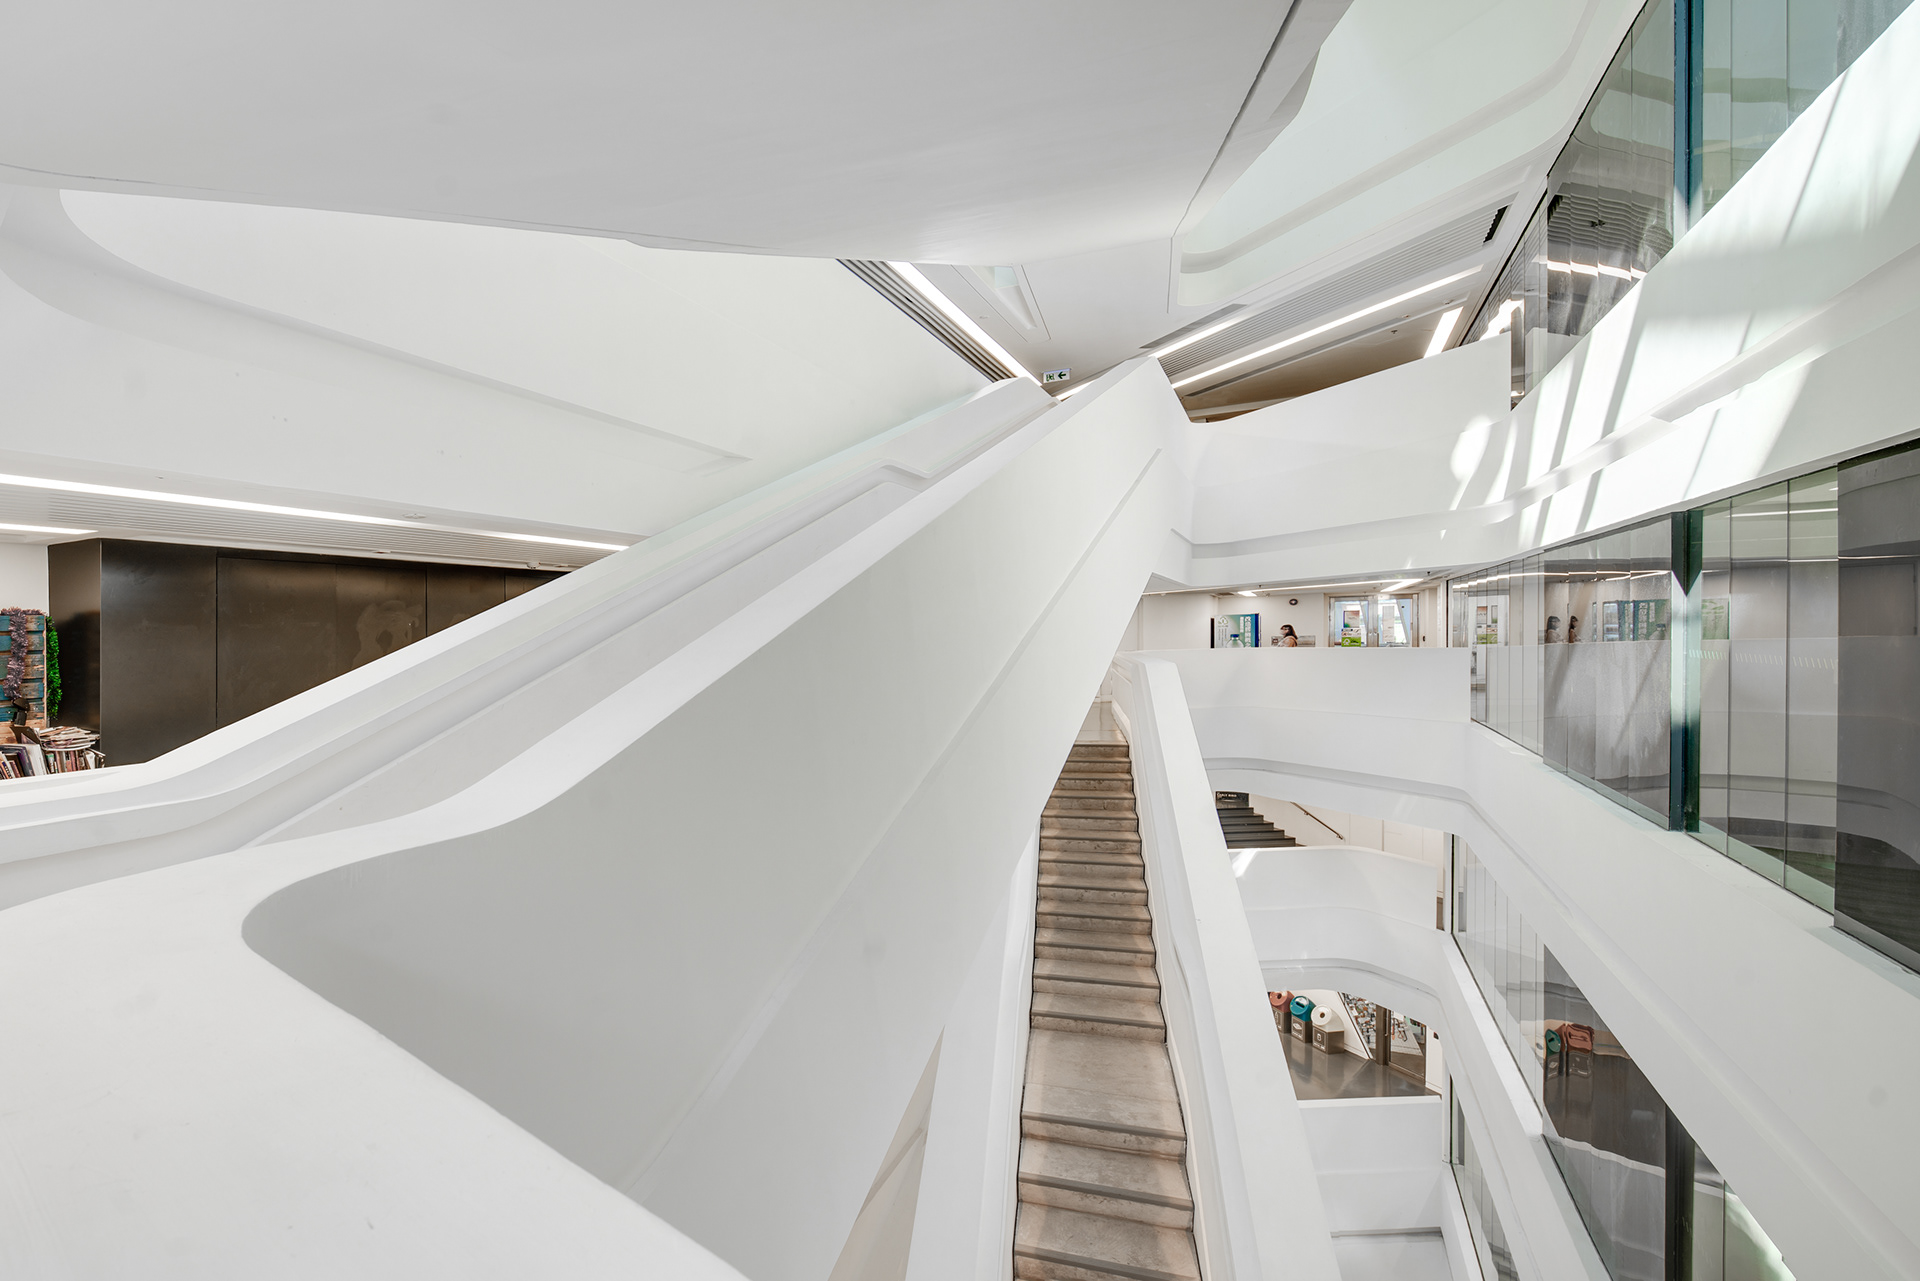 Zaha Hadid Architect's Amazingness Innovation Tower - Architecture Photography